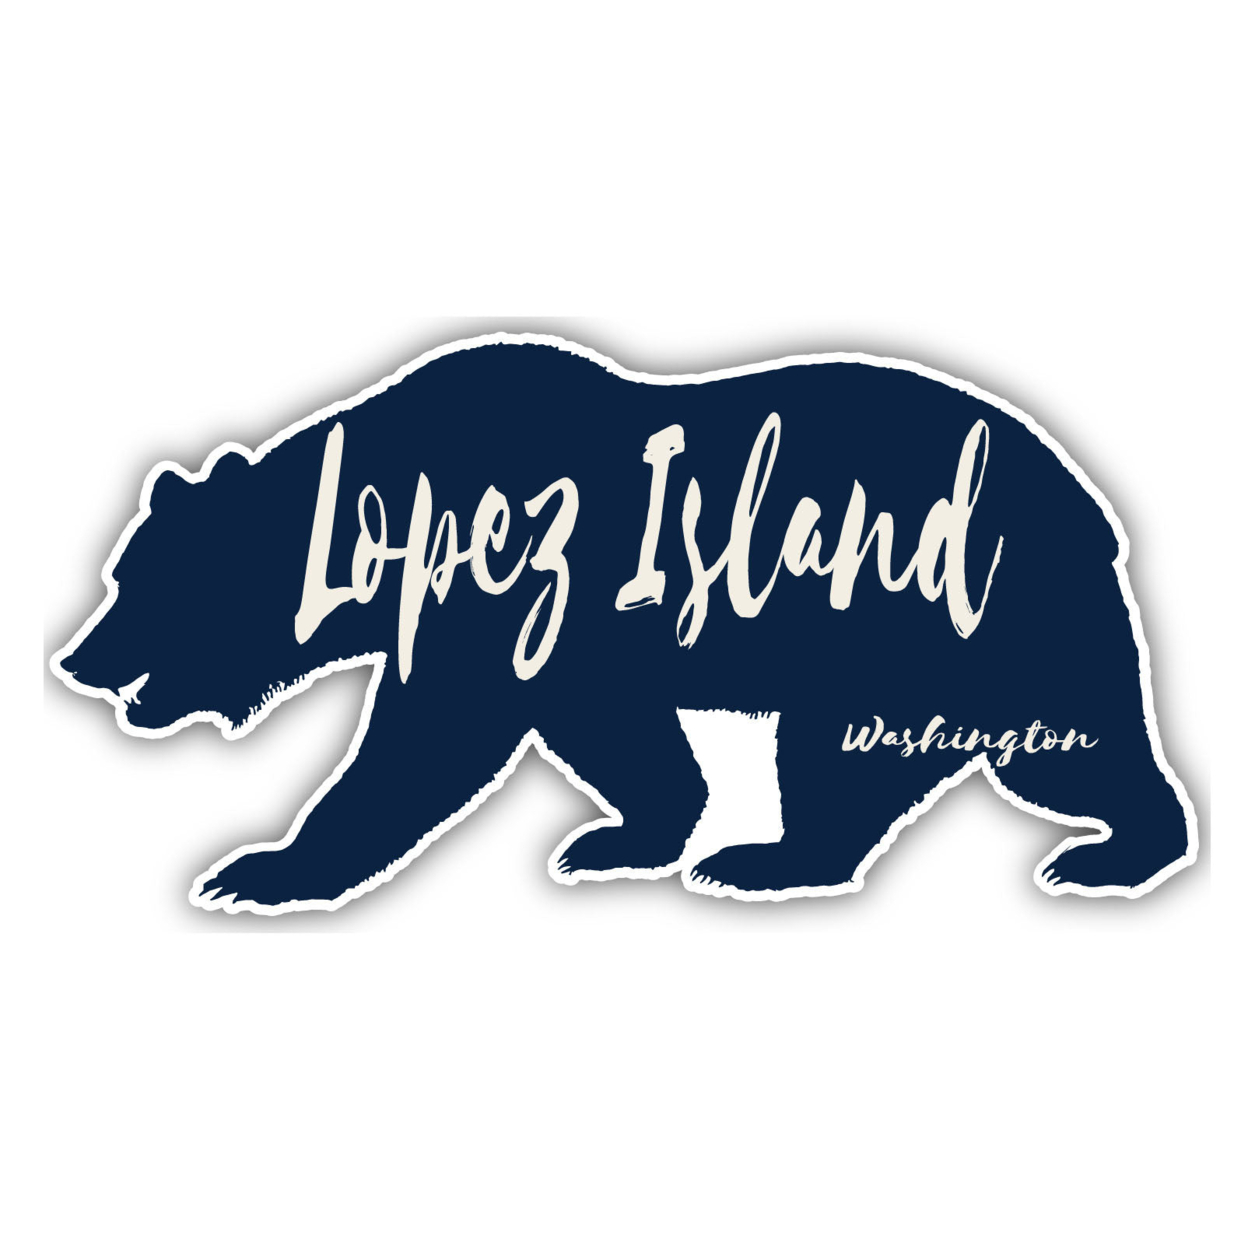 Lopez Island Washington Souvenir Decorative Stickers (Choose Theme And Size) - 2-Inch, Bear